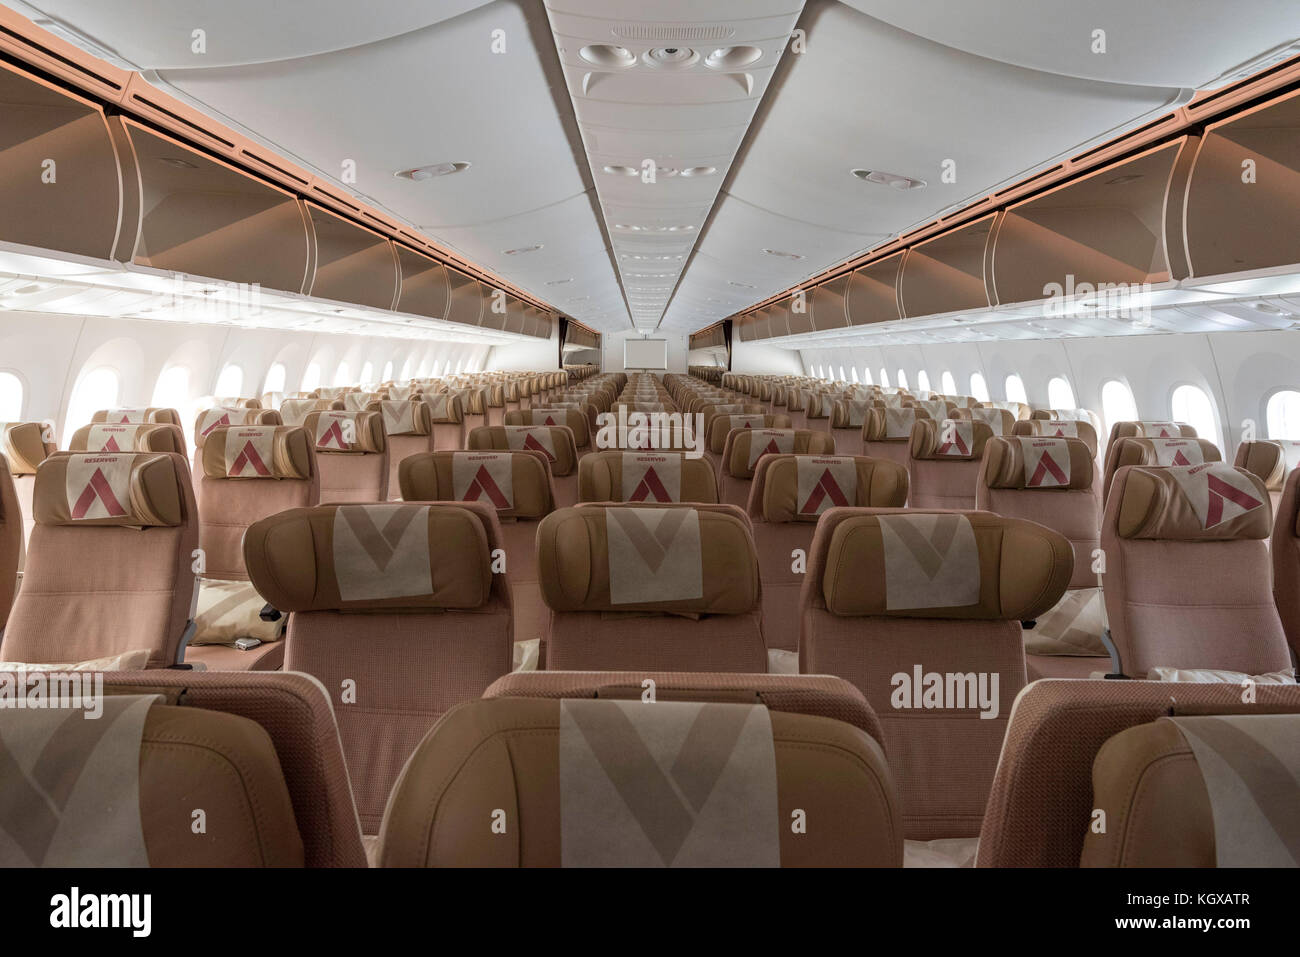 Etihad Airways aircraft interior. Boeing 787 economy / coach class seats Stock Photo